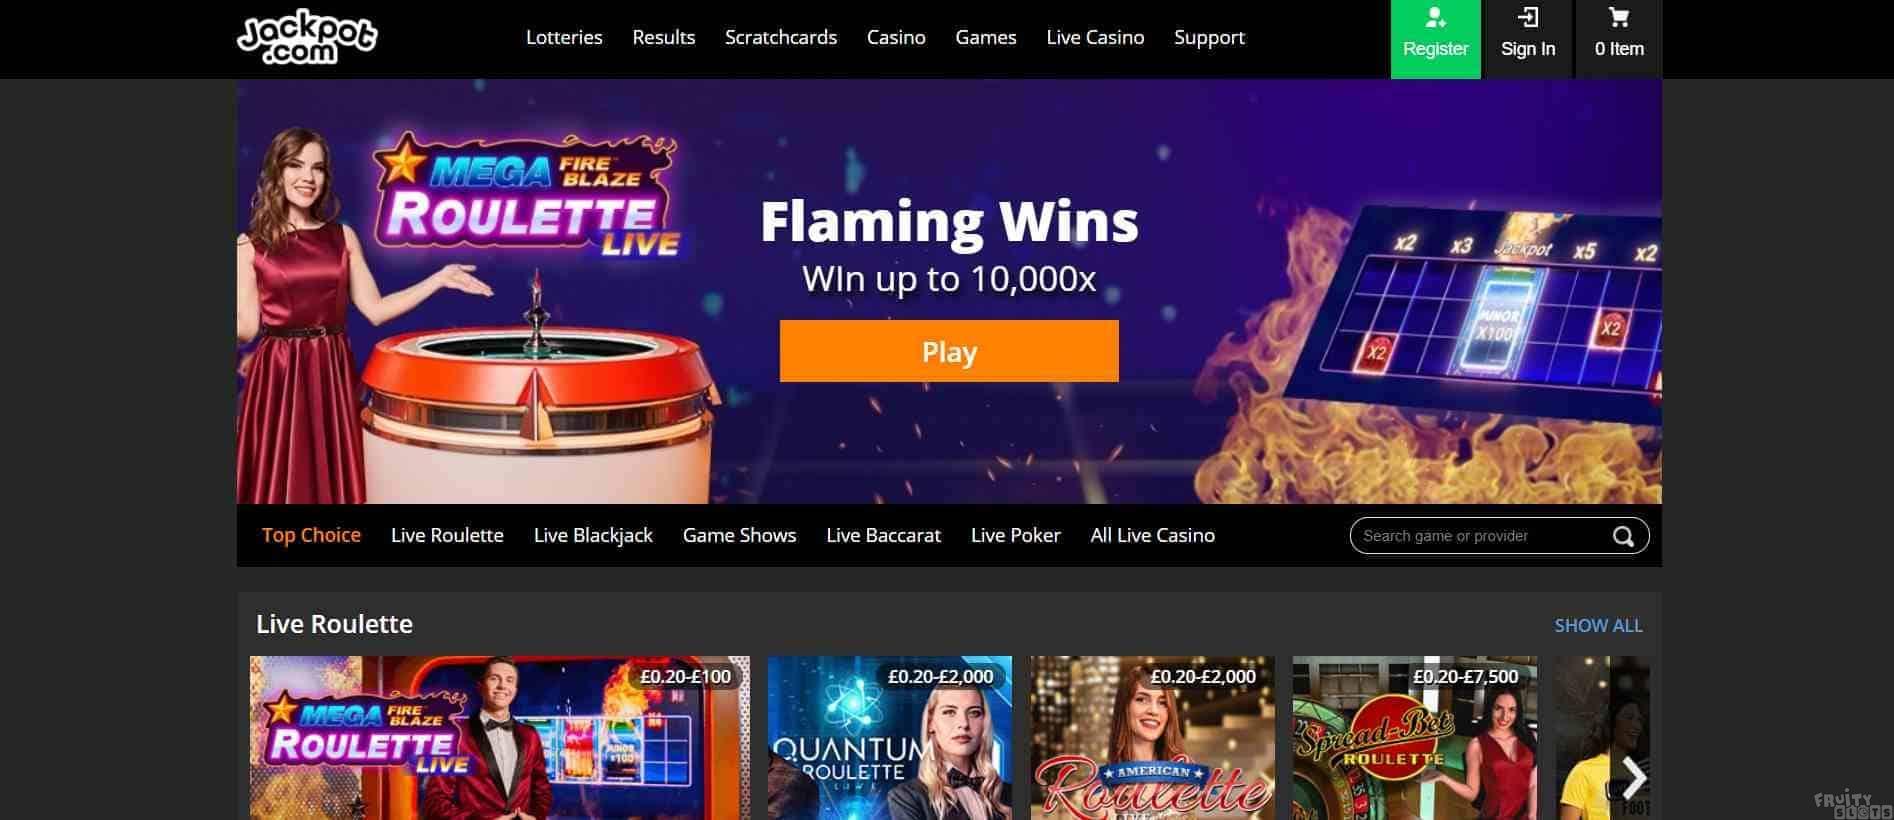 Jackpot.com Live Casino